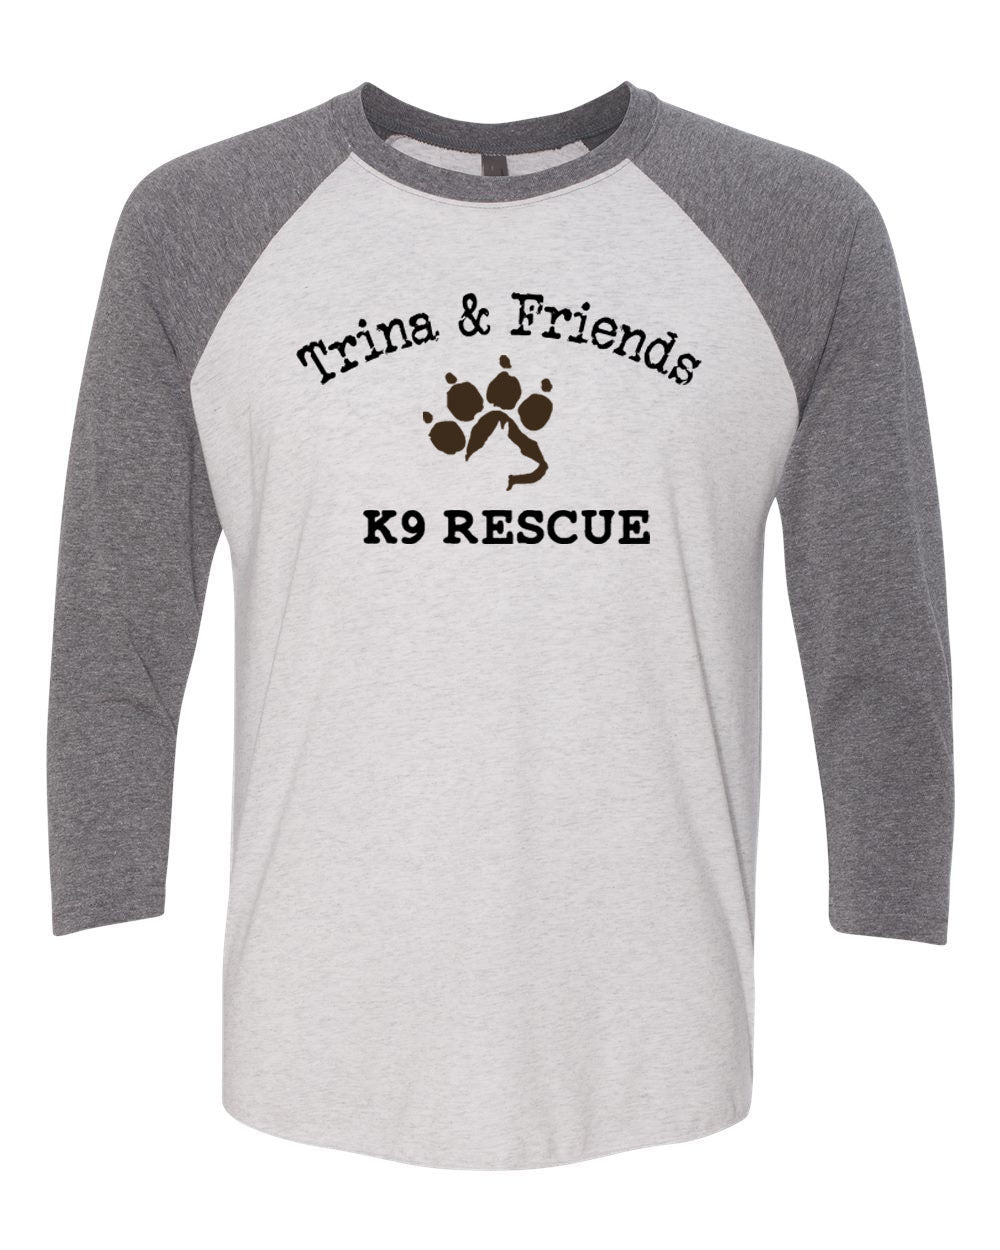 Trina & Friends Design 6 raglan shirt